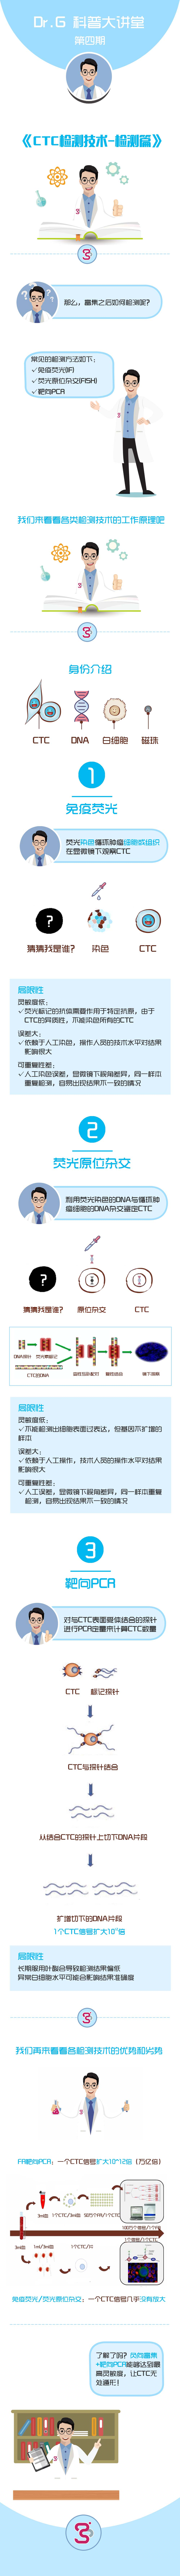 4 Dr G CTC检测技术.jpg